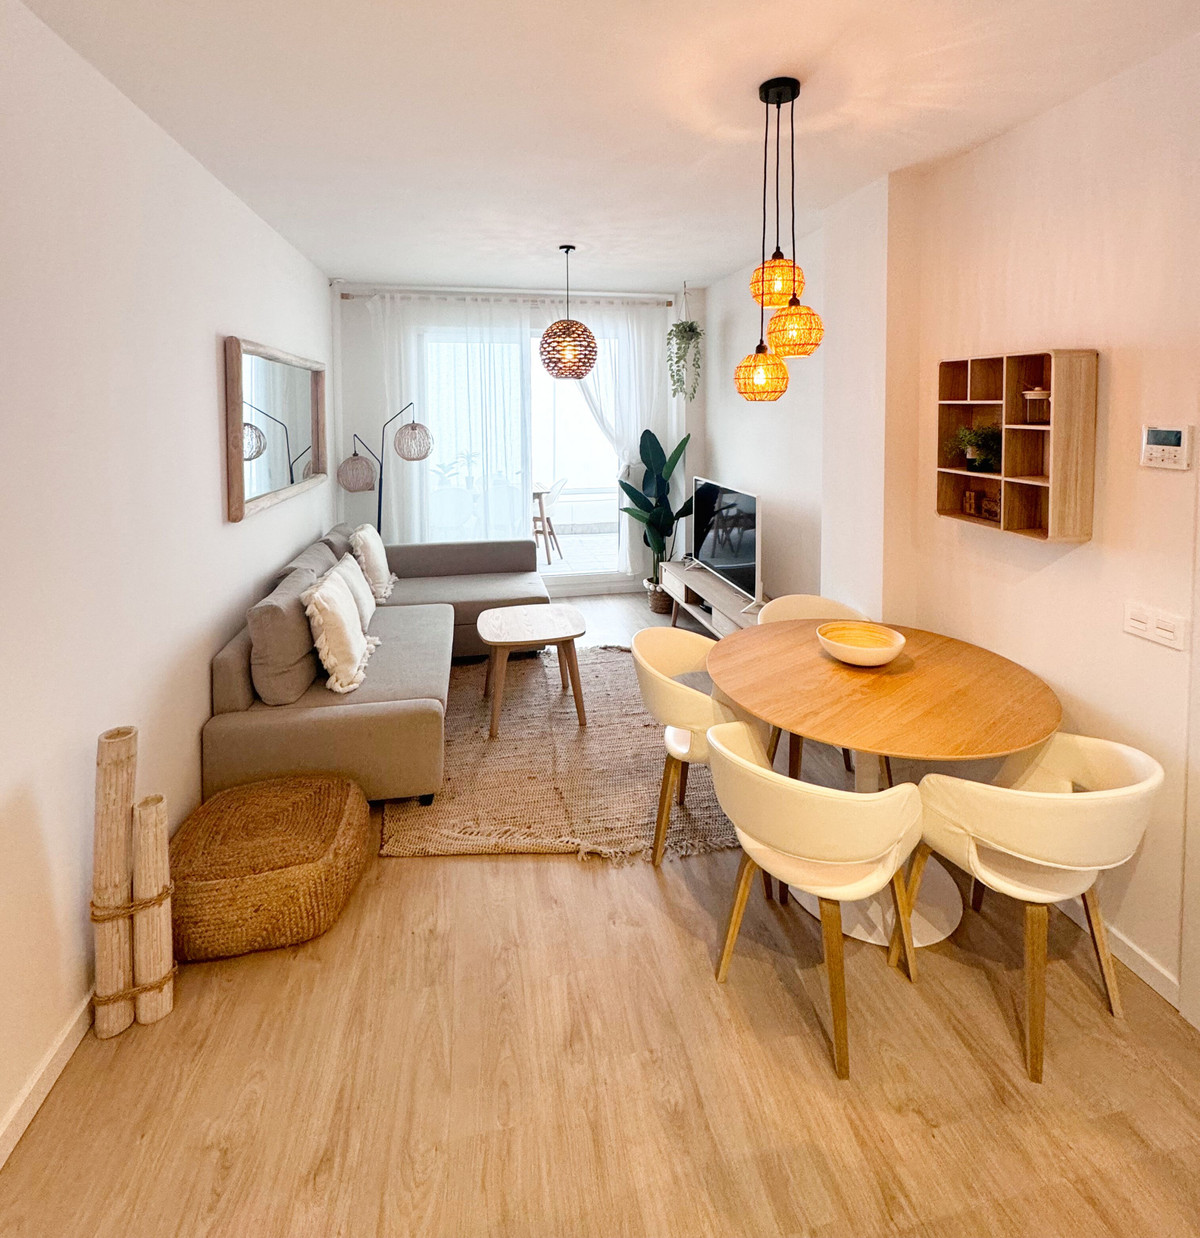 Apartment Ground Floor for sale in Marbella, Costa del Sol